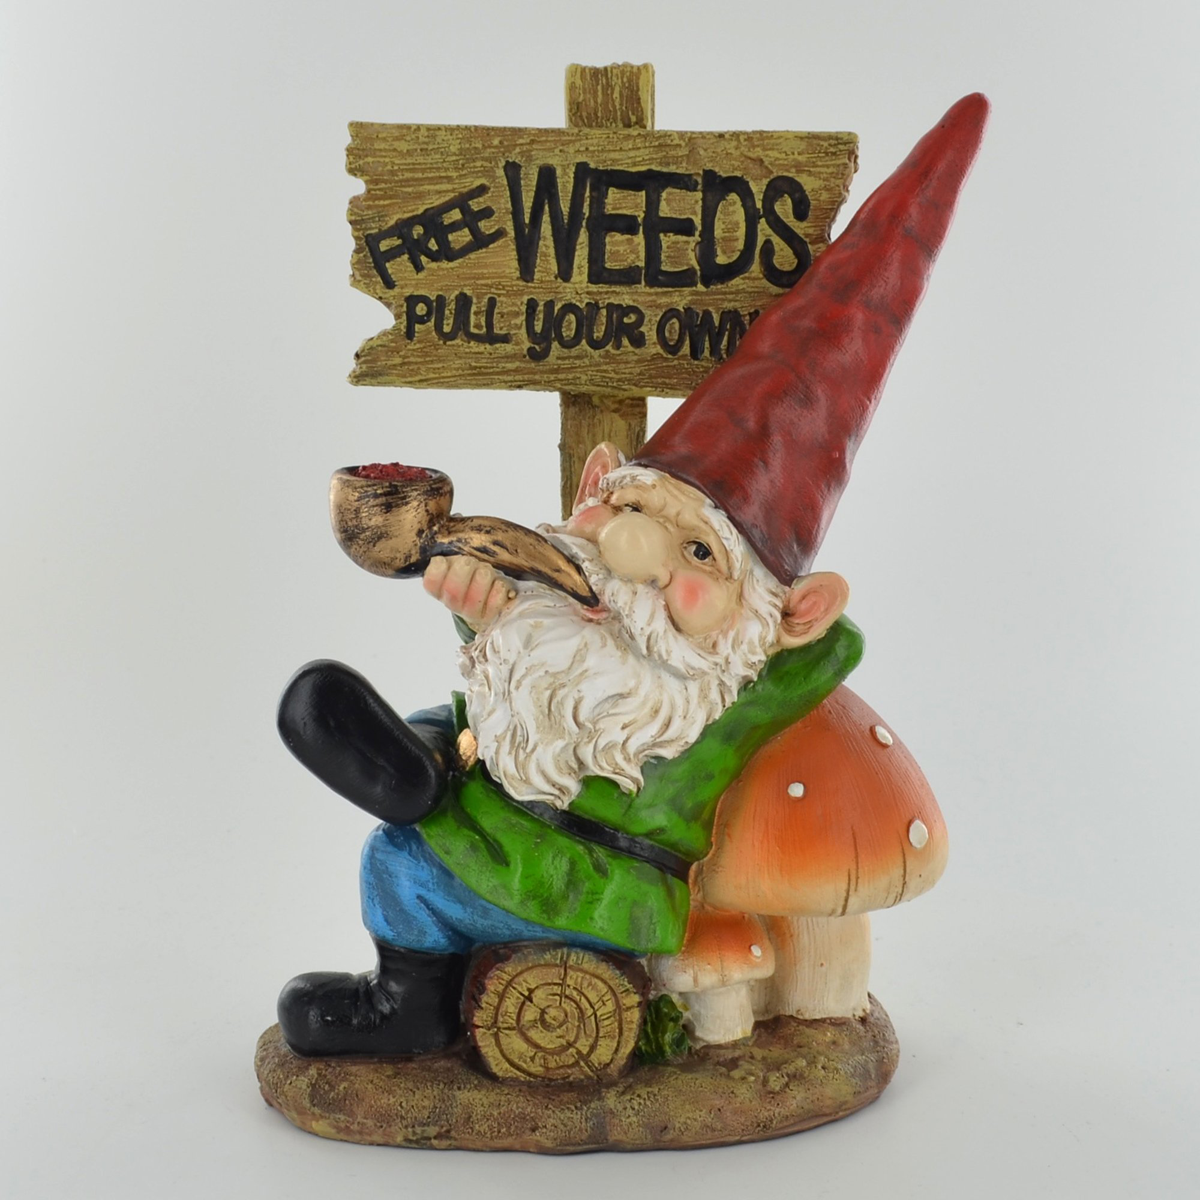 GNOME - FREE WEEDS  CODE: 39185